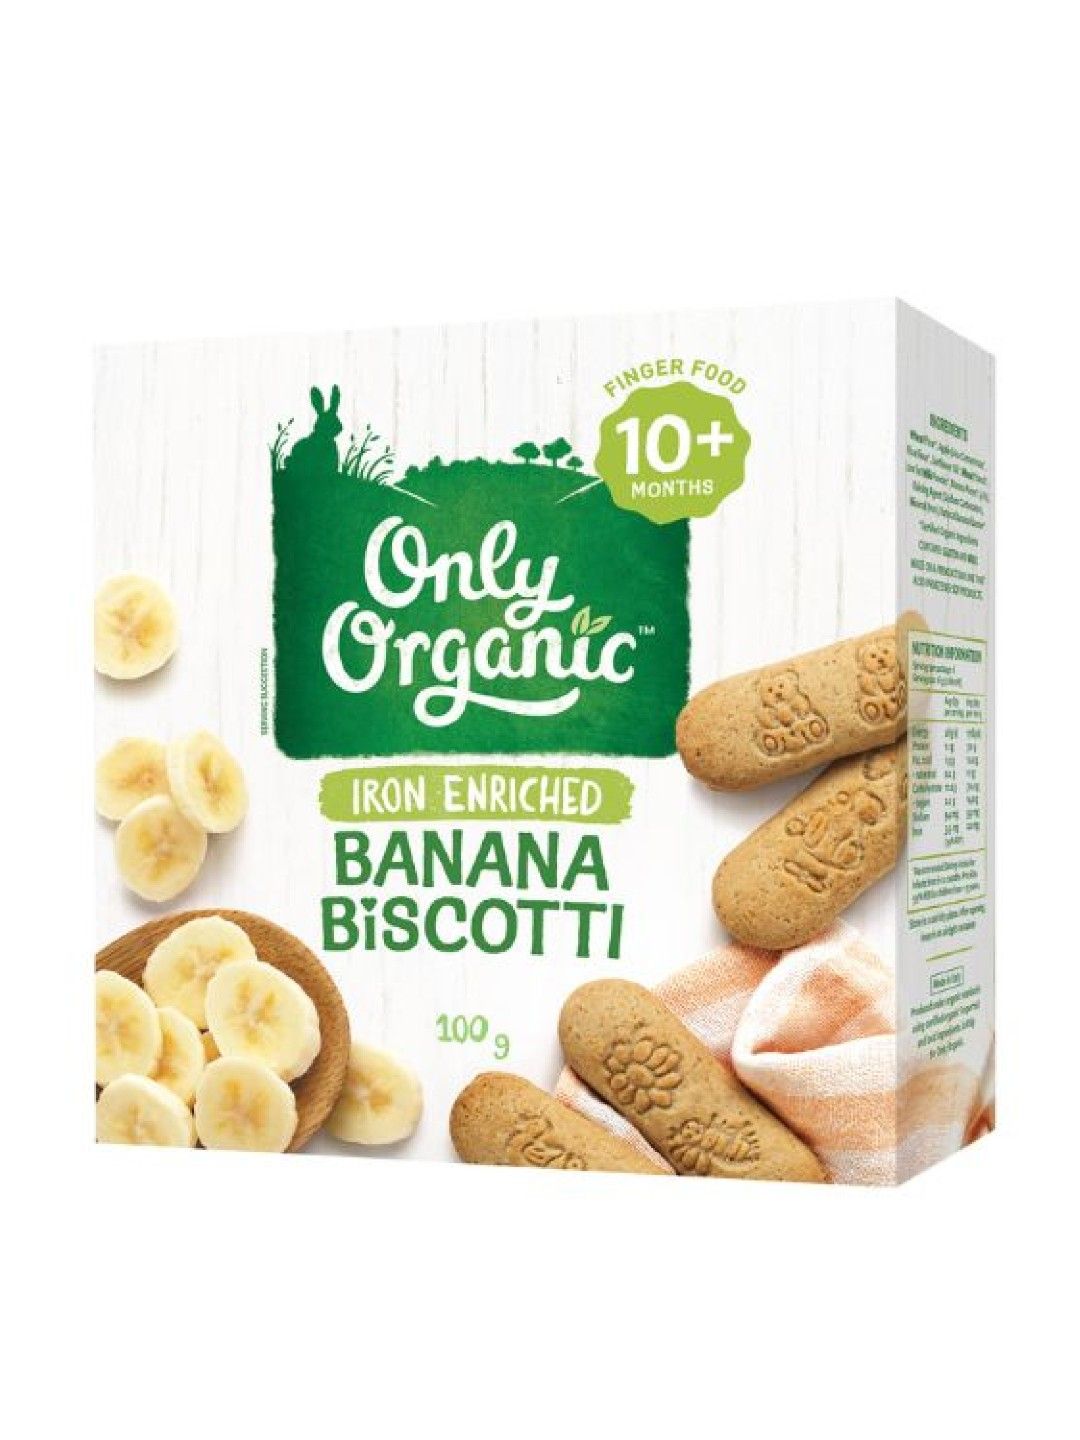 Only Organic Banana Biscotti (10+ mos) 100g (No Color- Image 1)